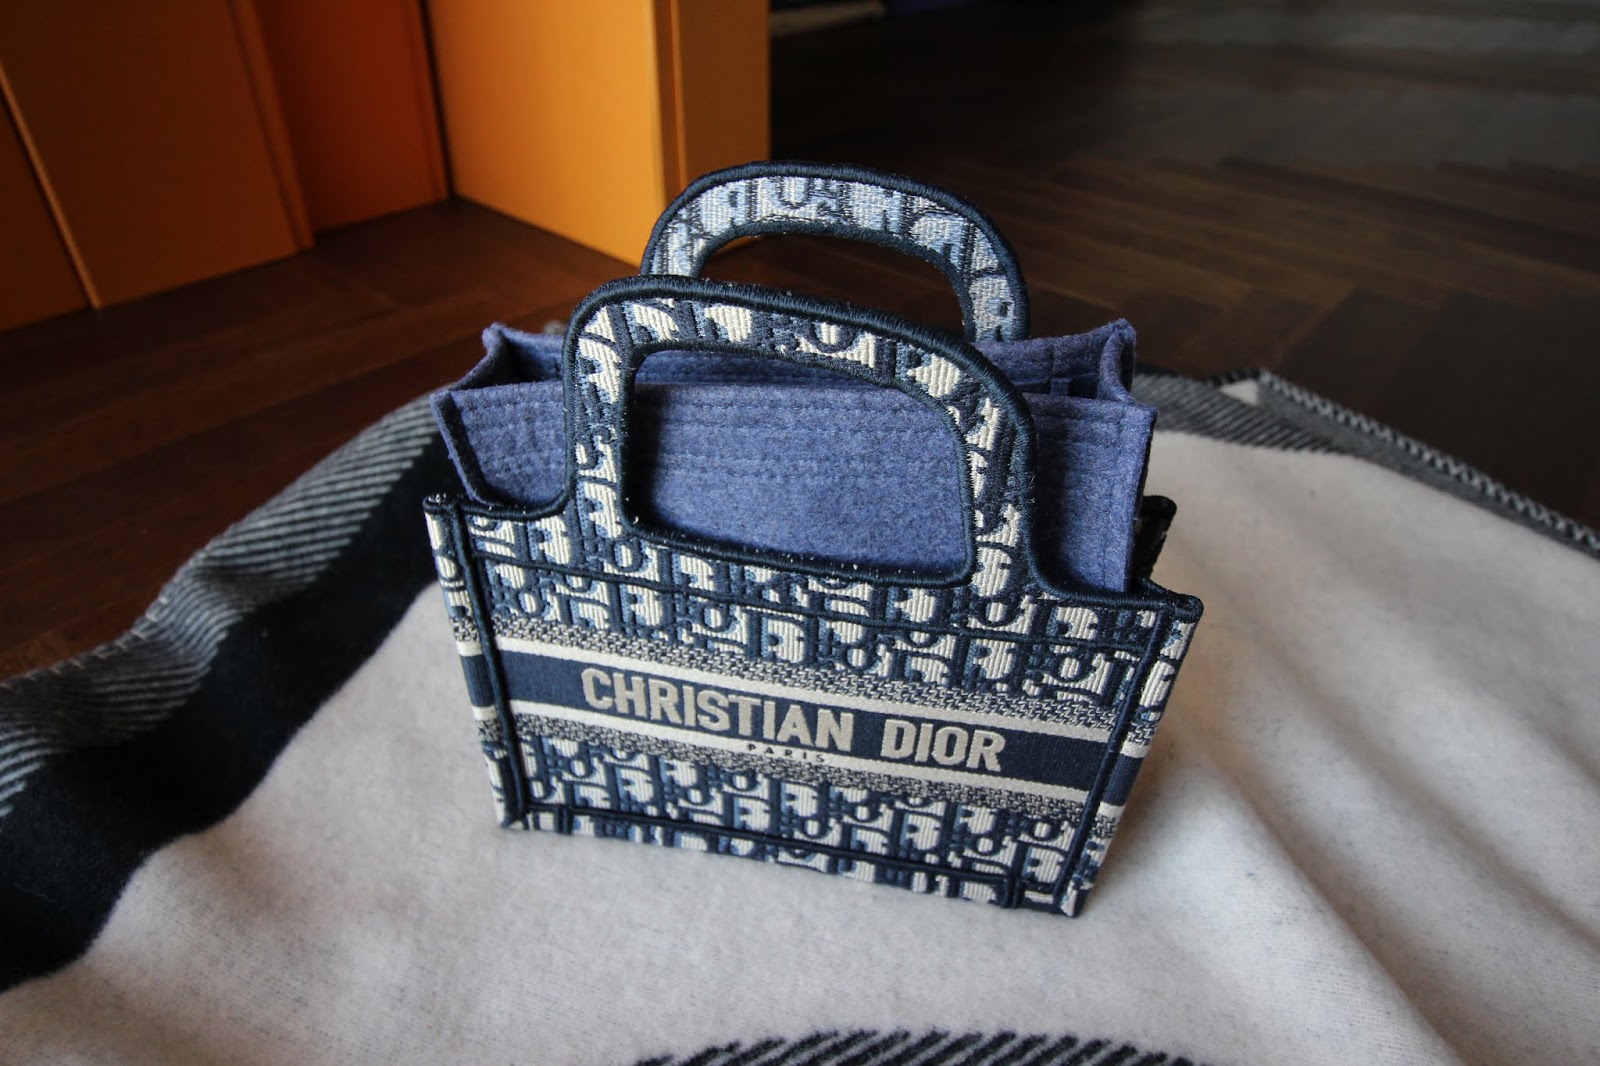 Samorga Bag Organizer Review for the Louis Vuitton Delightful MM